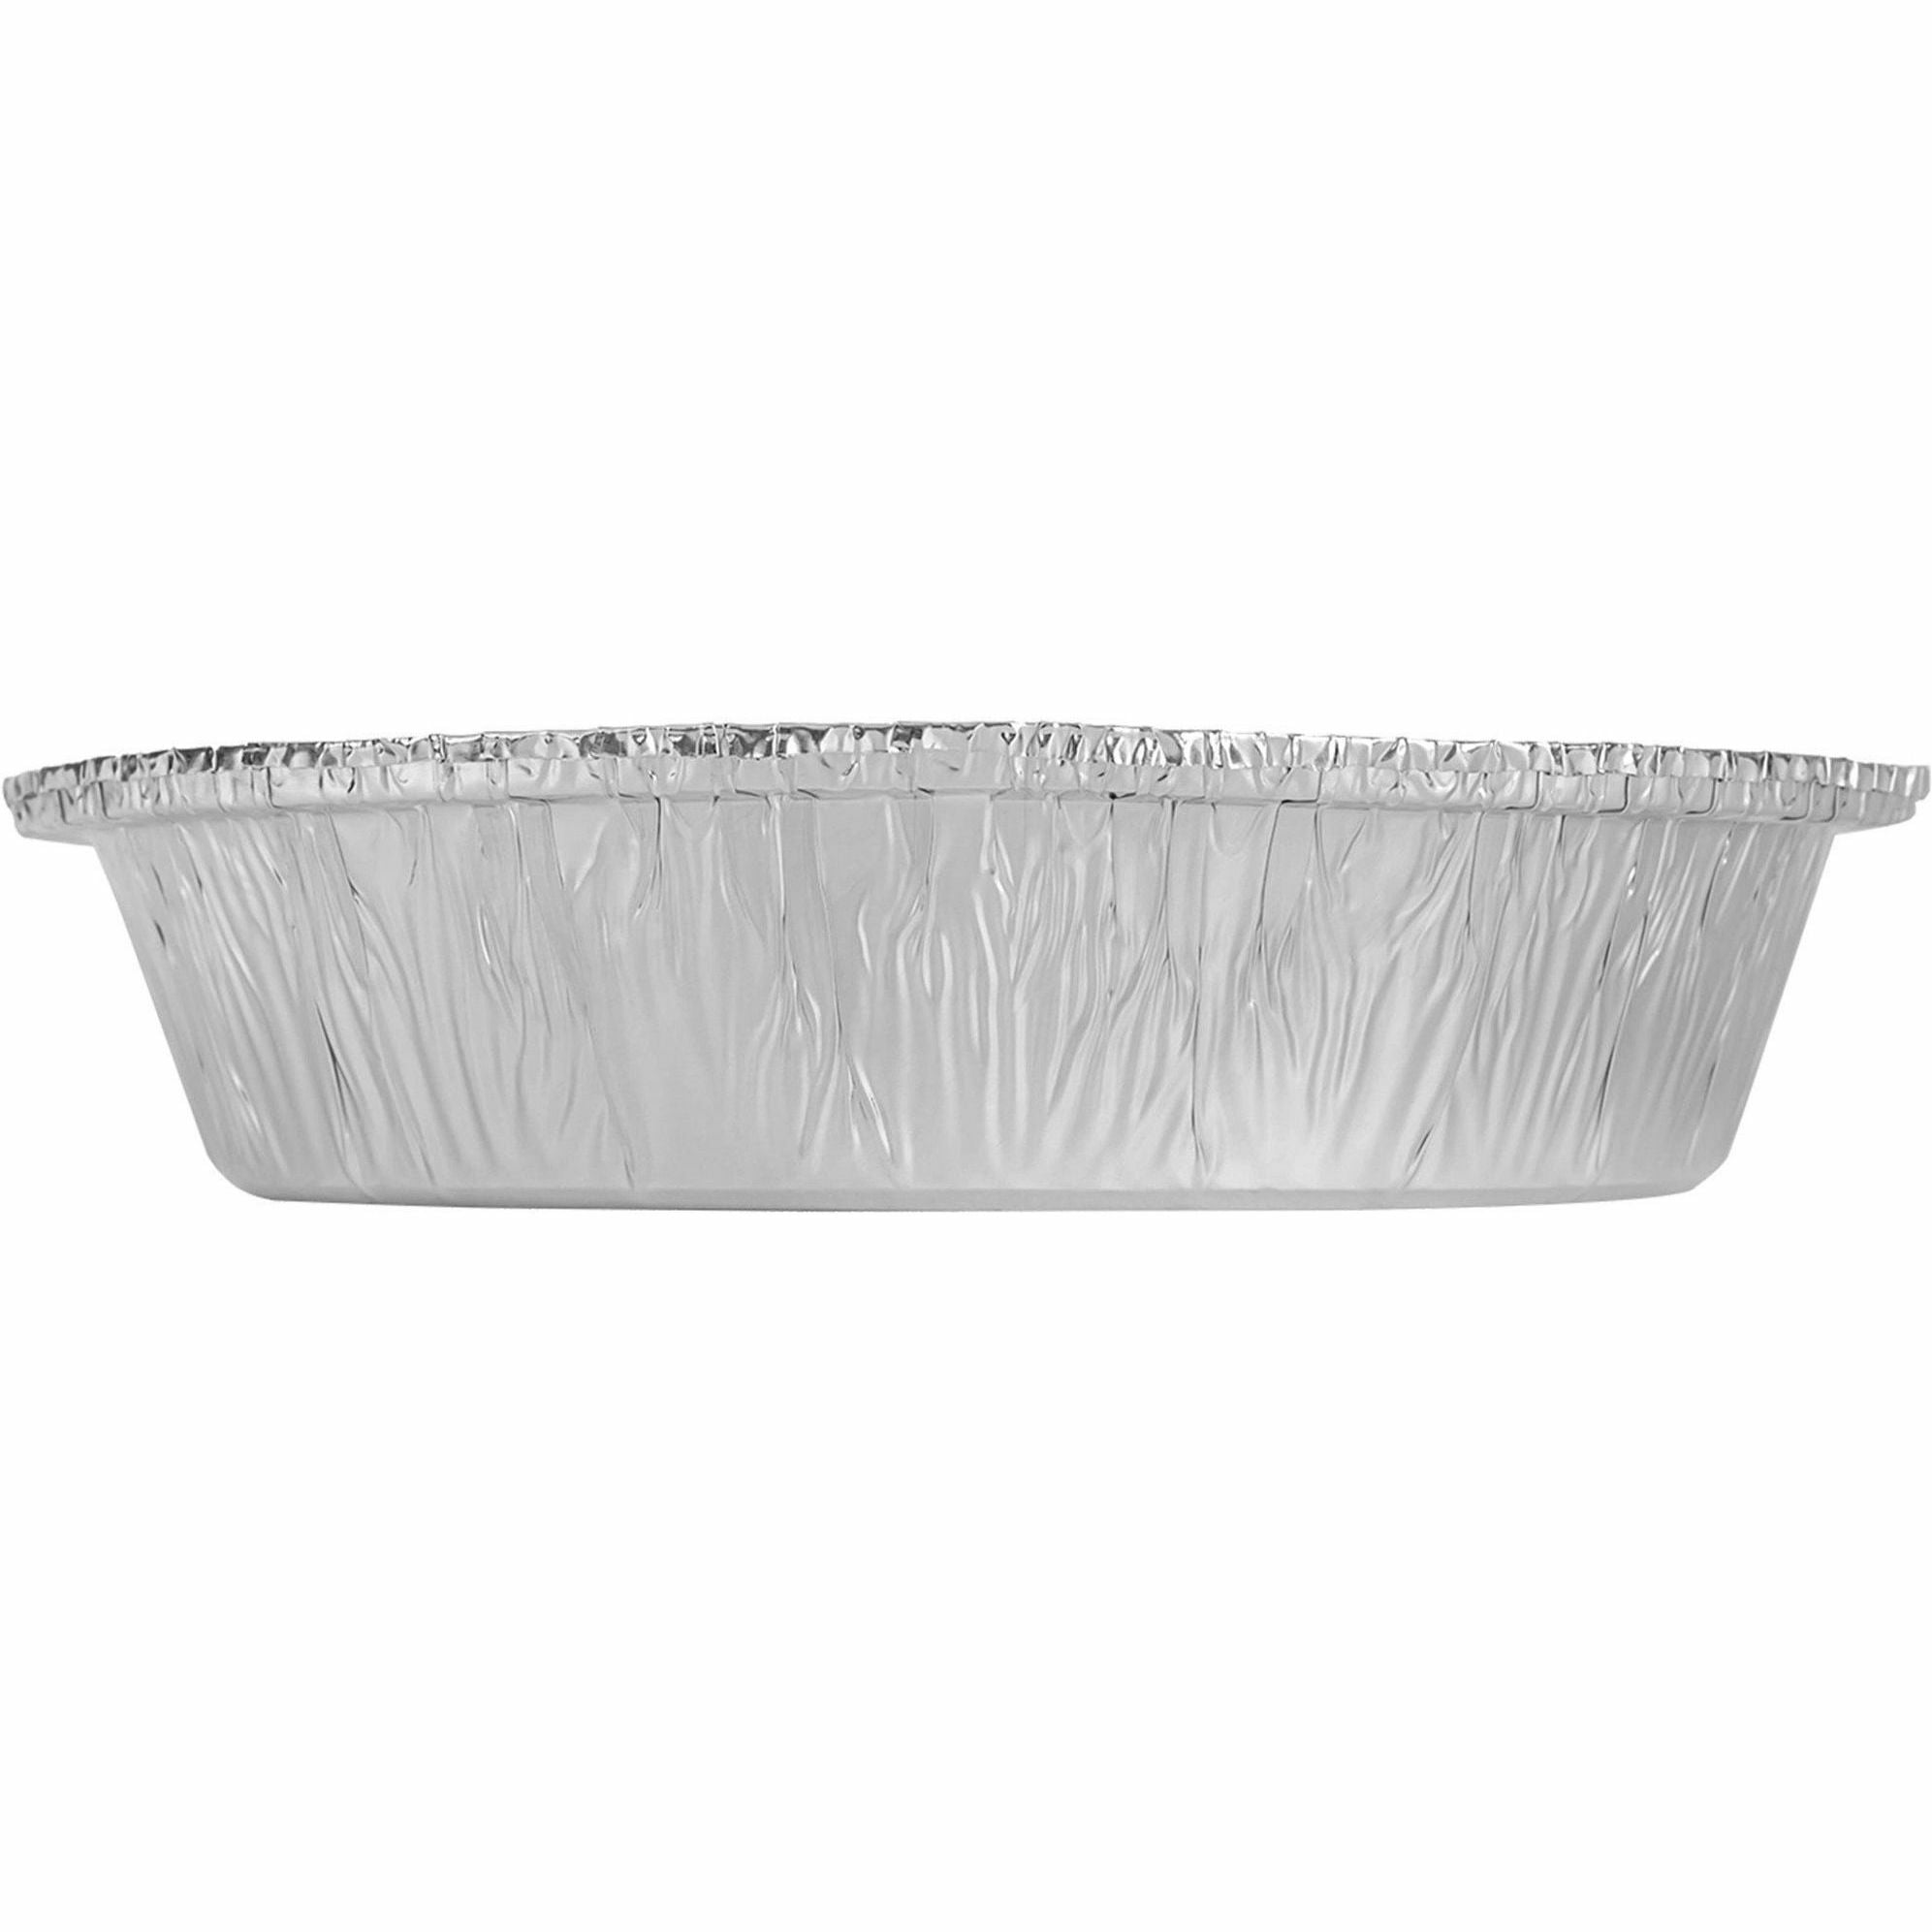 BluTable 7" Round Foil Pans - Food, Food Storage - Silver - Aluminum Body - Round - 500 / Carton - 2